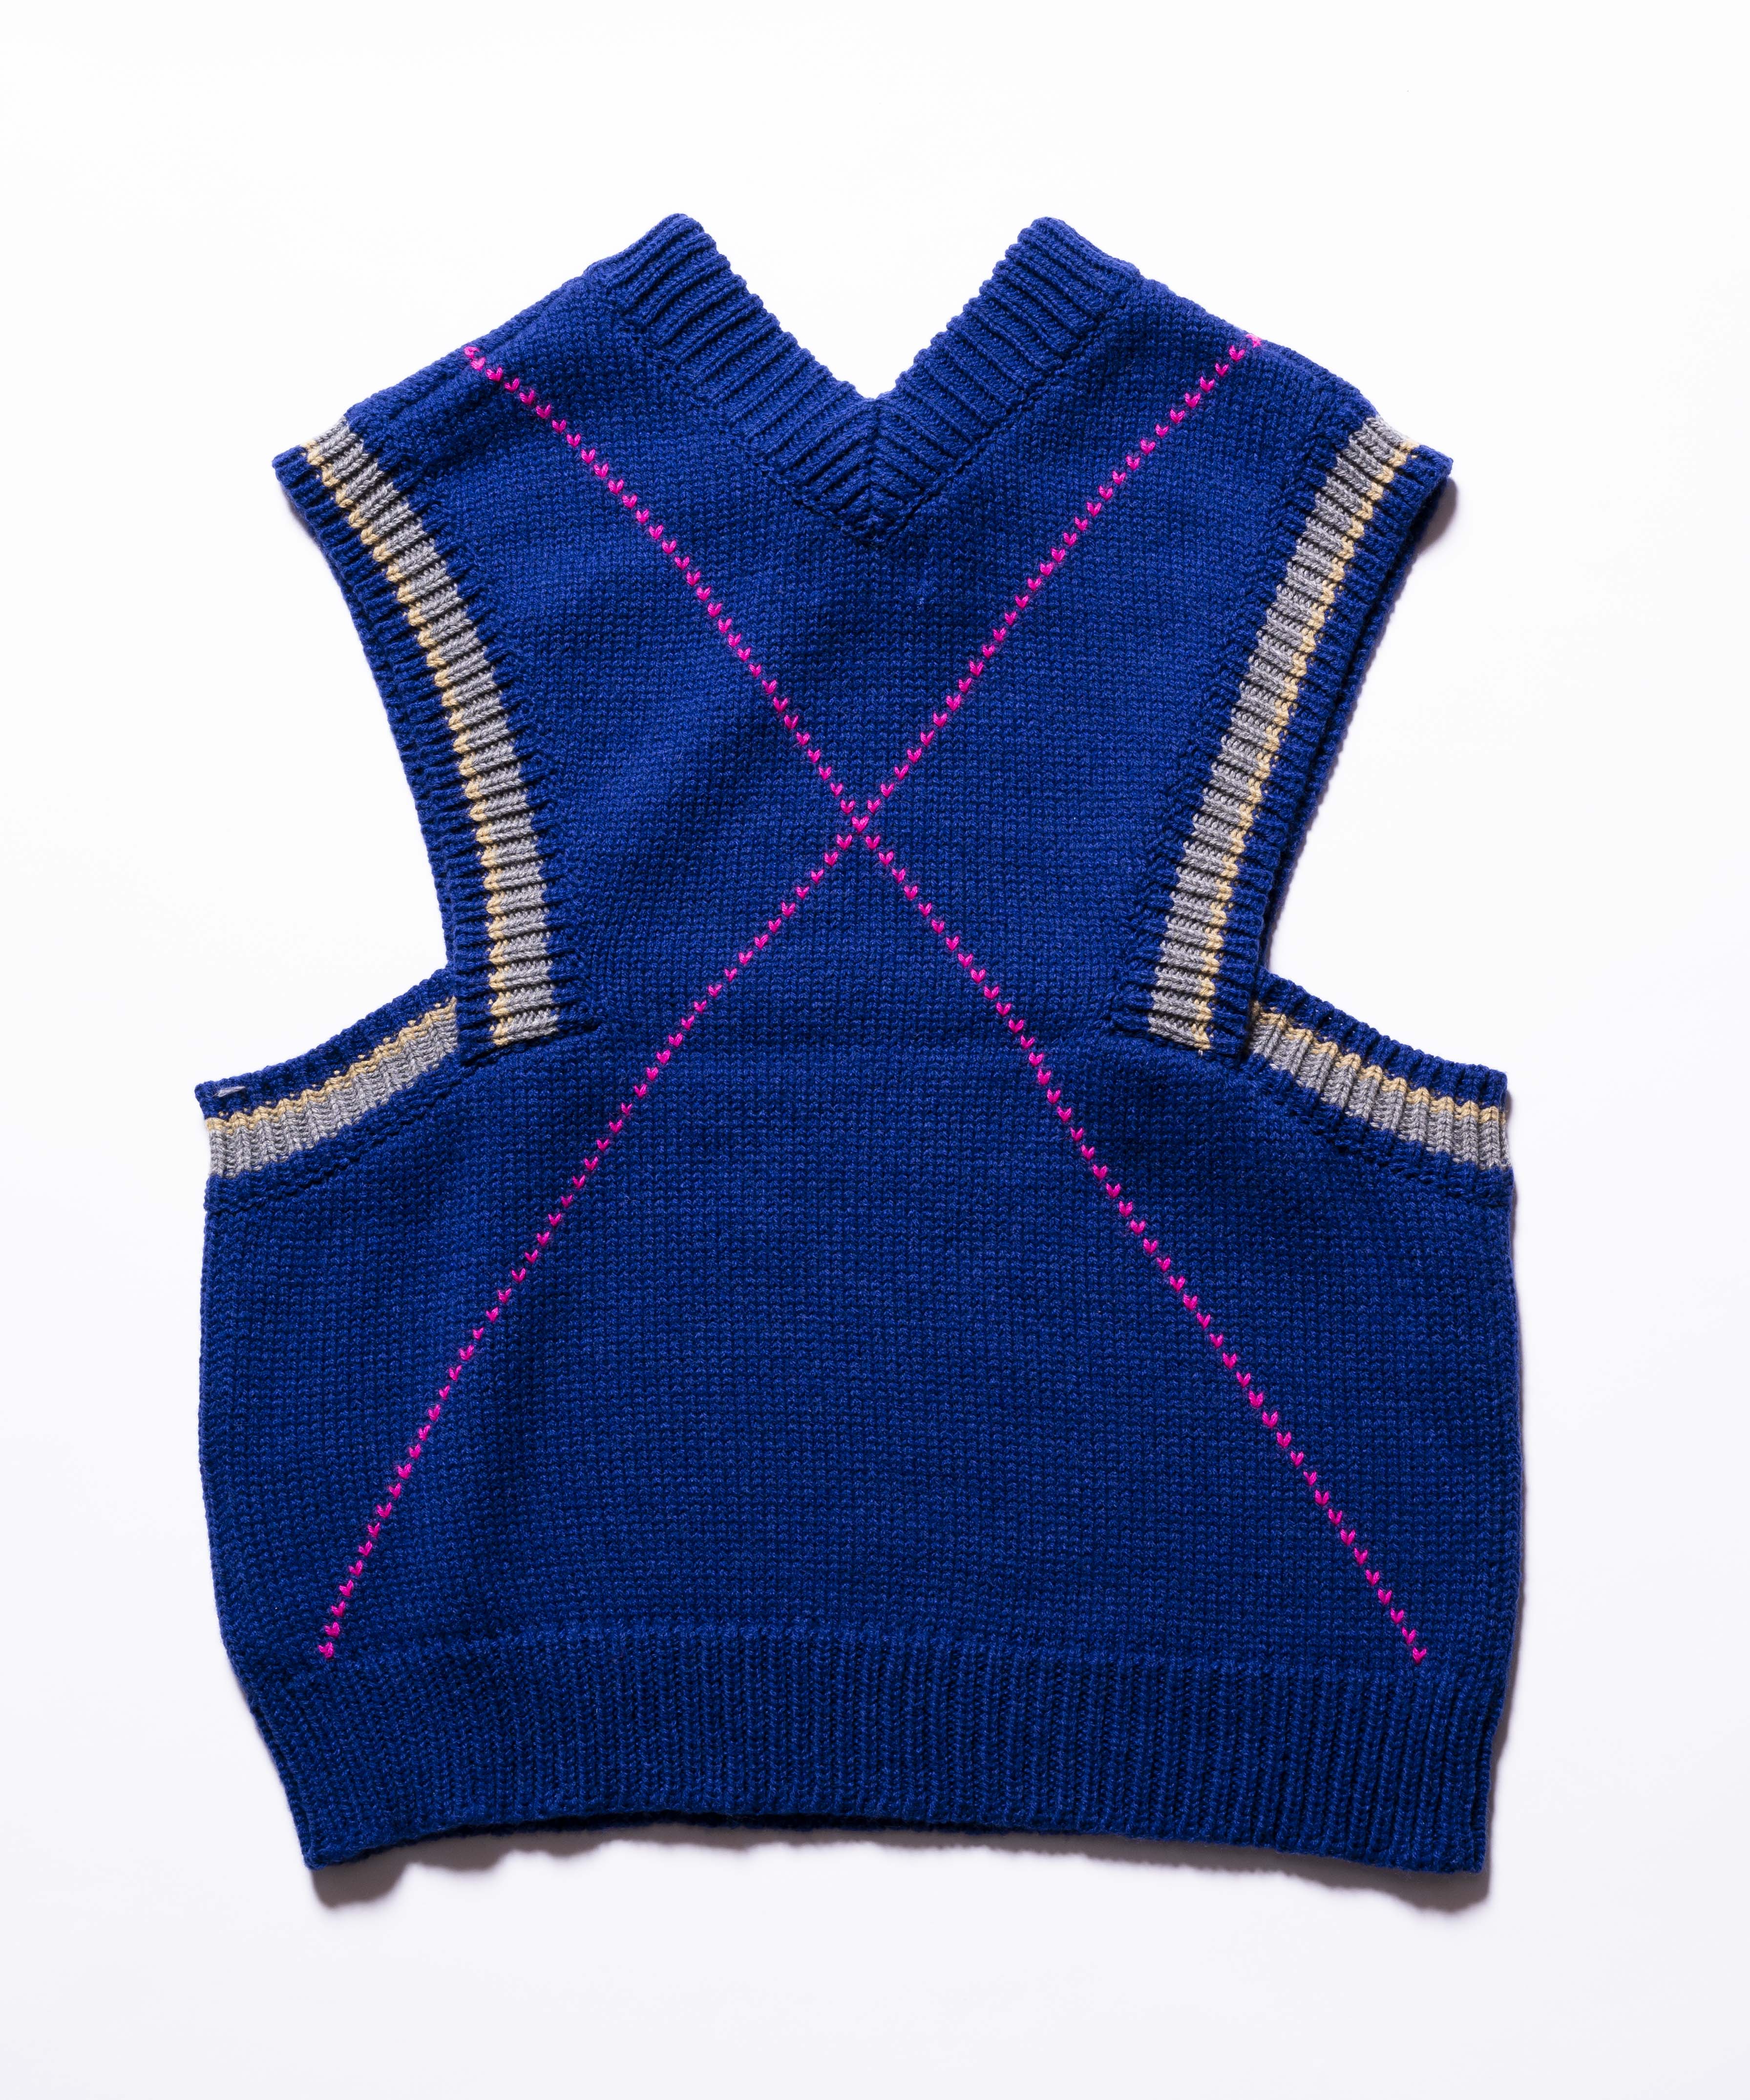 KUDOS knit vest | www.carmenundmelanie.at